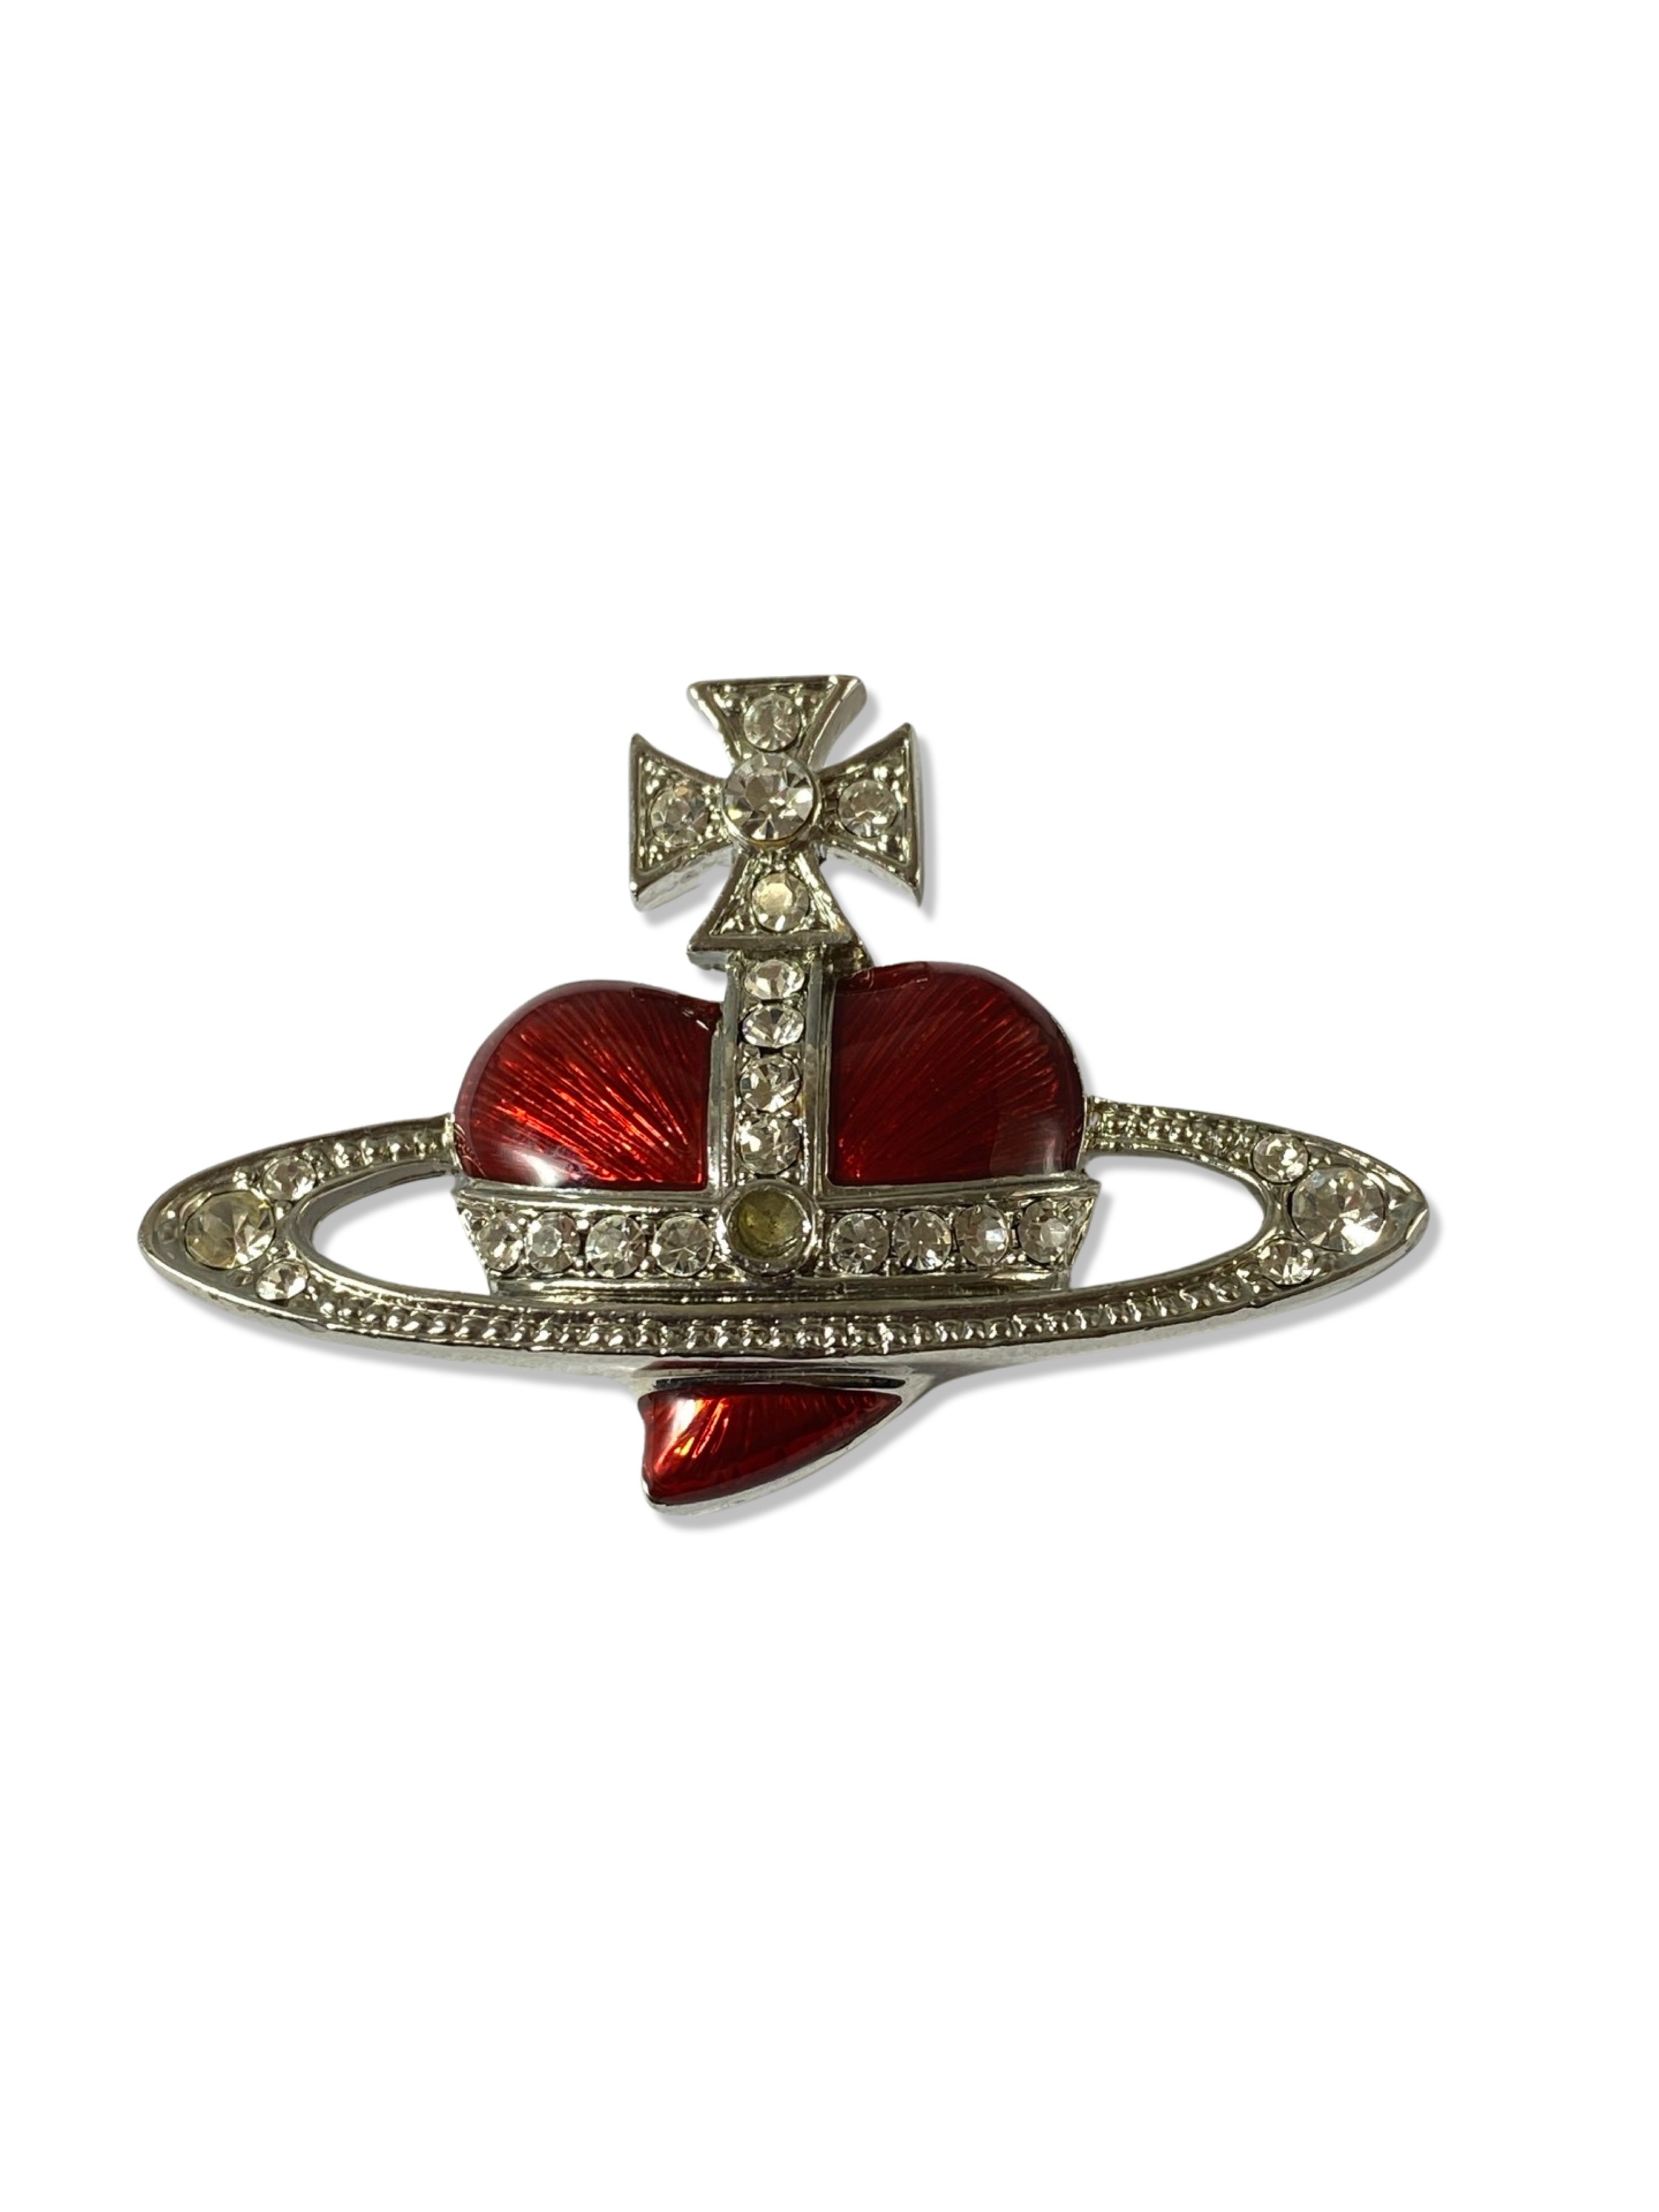 Vivienne Westwood Red Heart Orb brooch and earrings Set weight of 34.71 grams - Image 2 of 3